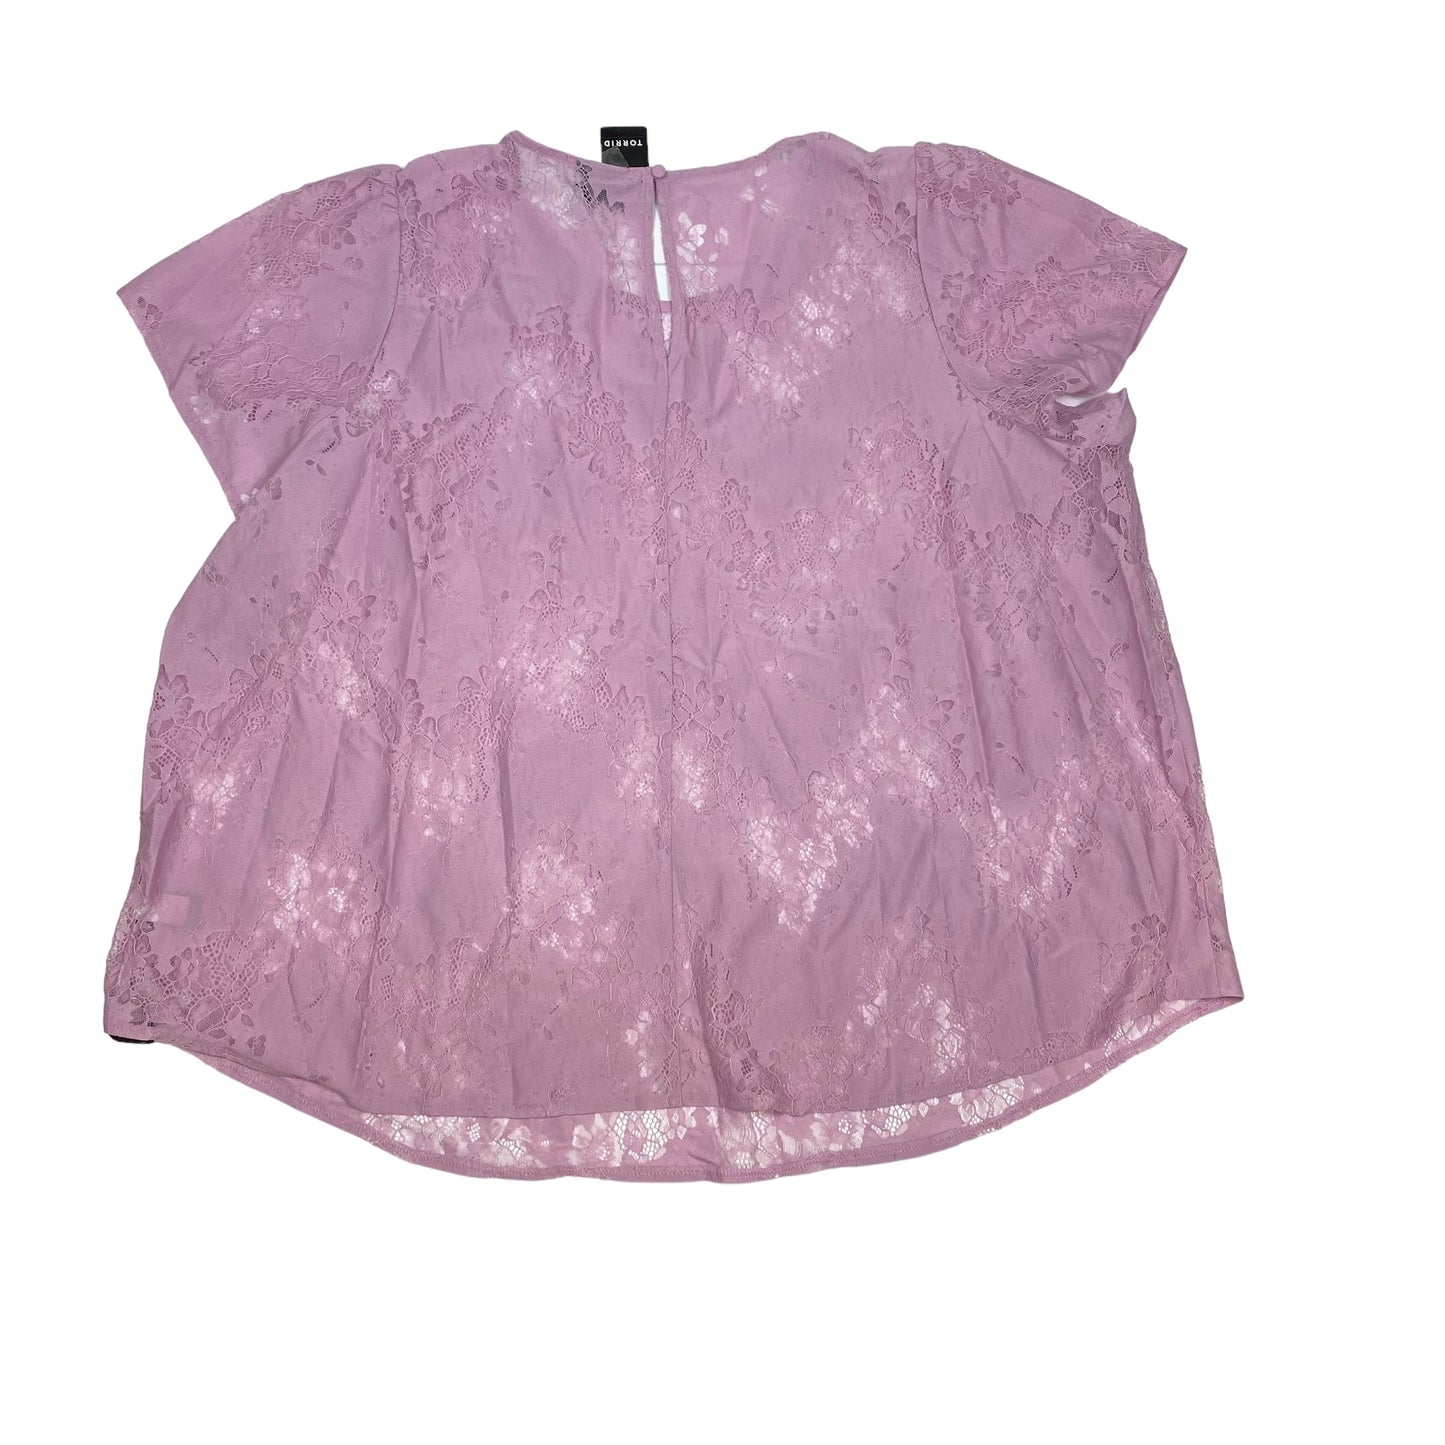 Purple Blouse Short Sleeve Torrid, Size 4x